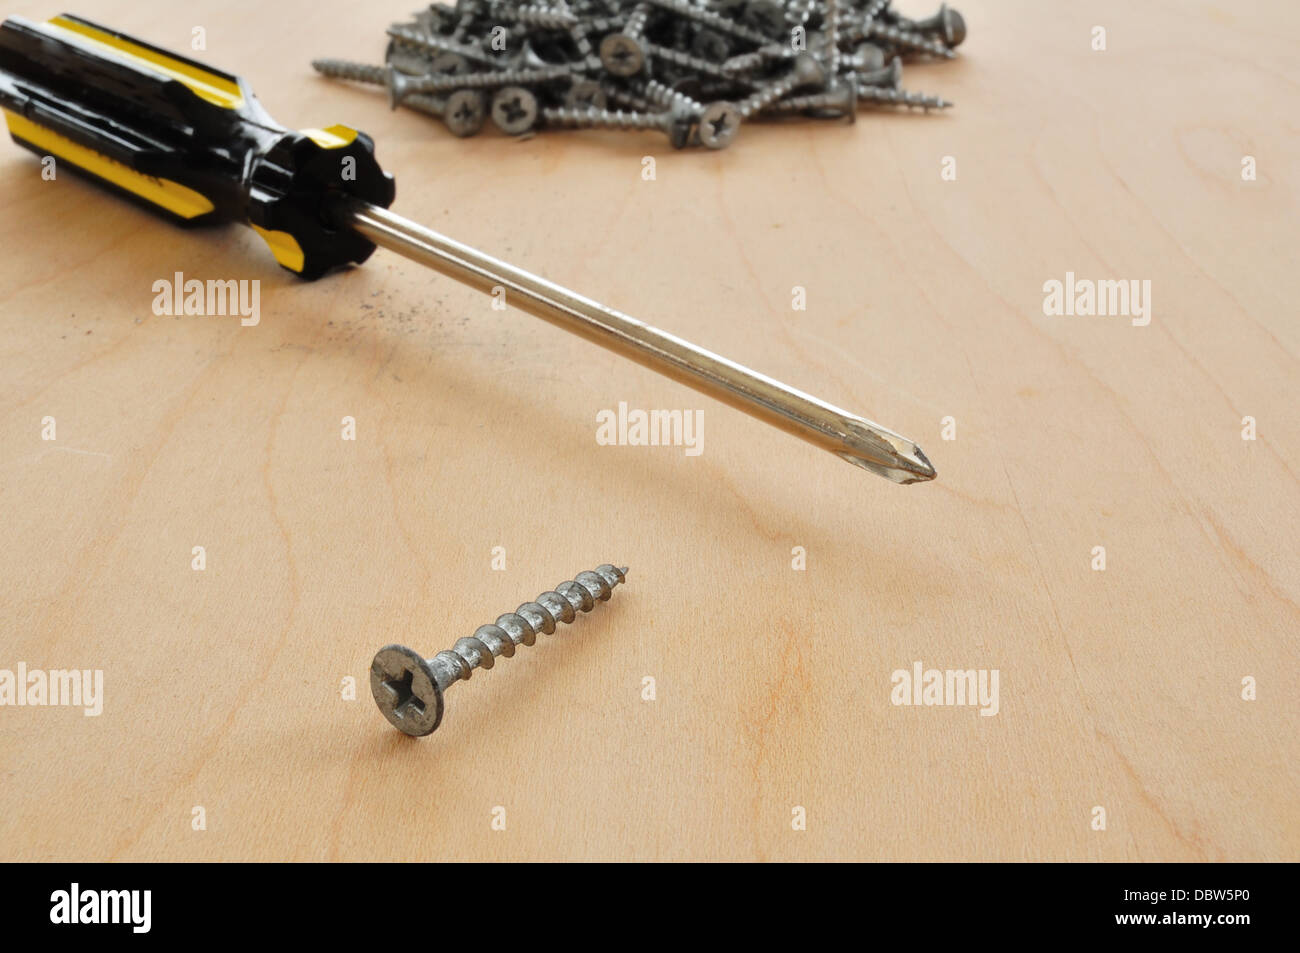 Screwdriver and screws Stock Photo